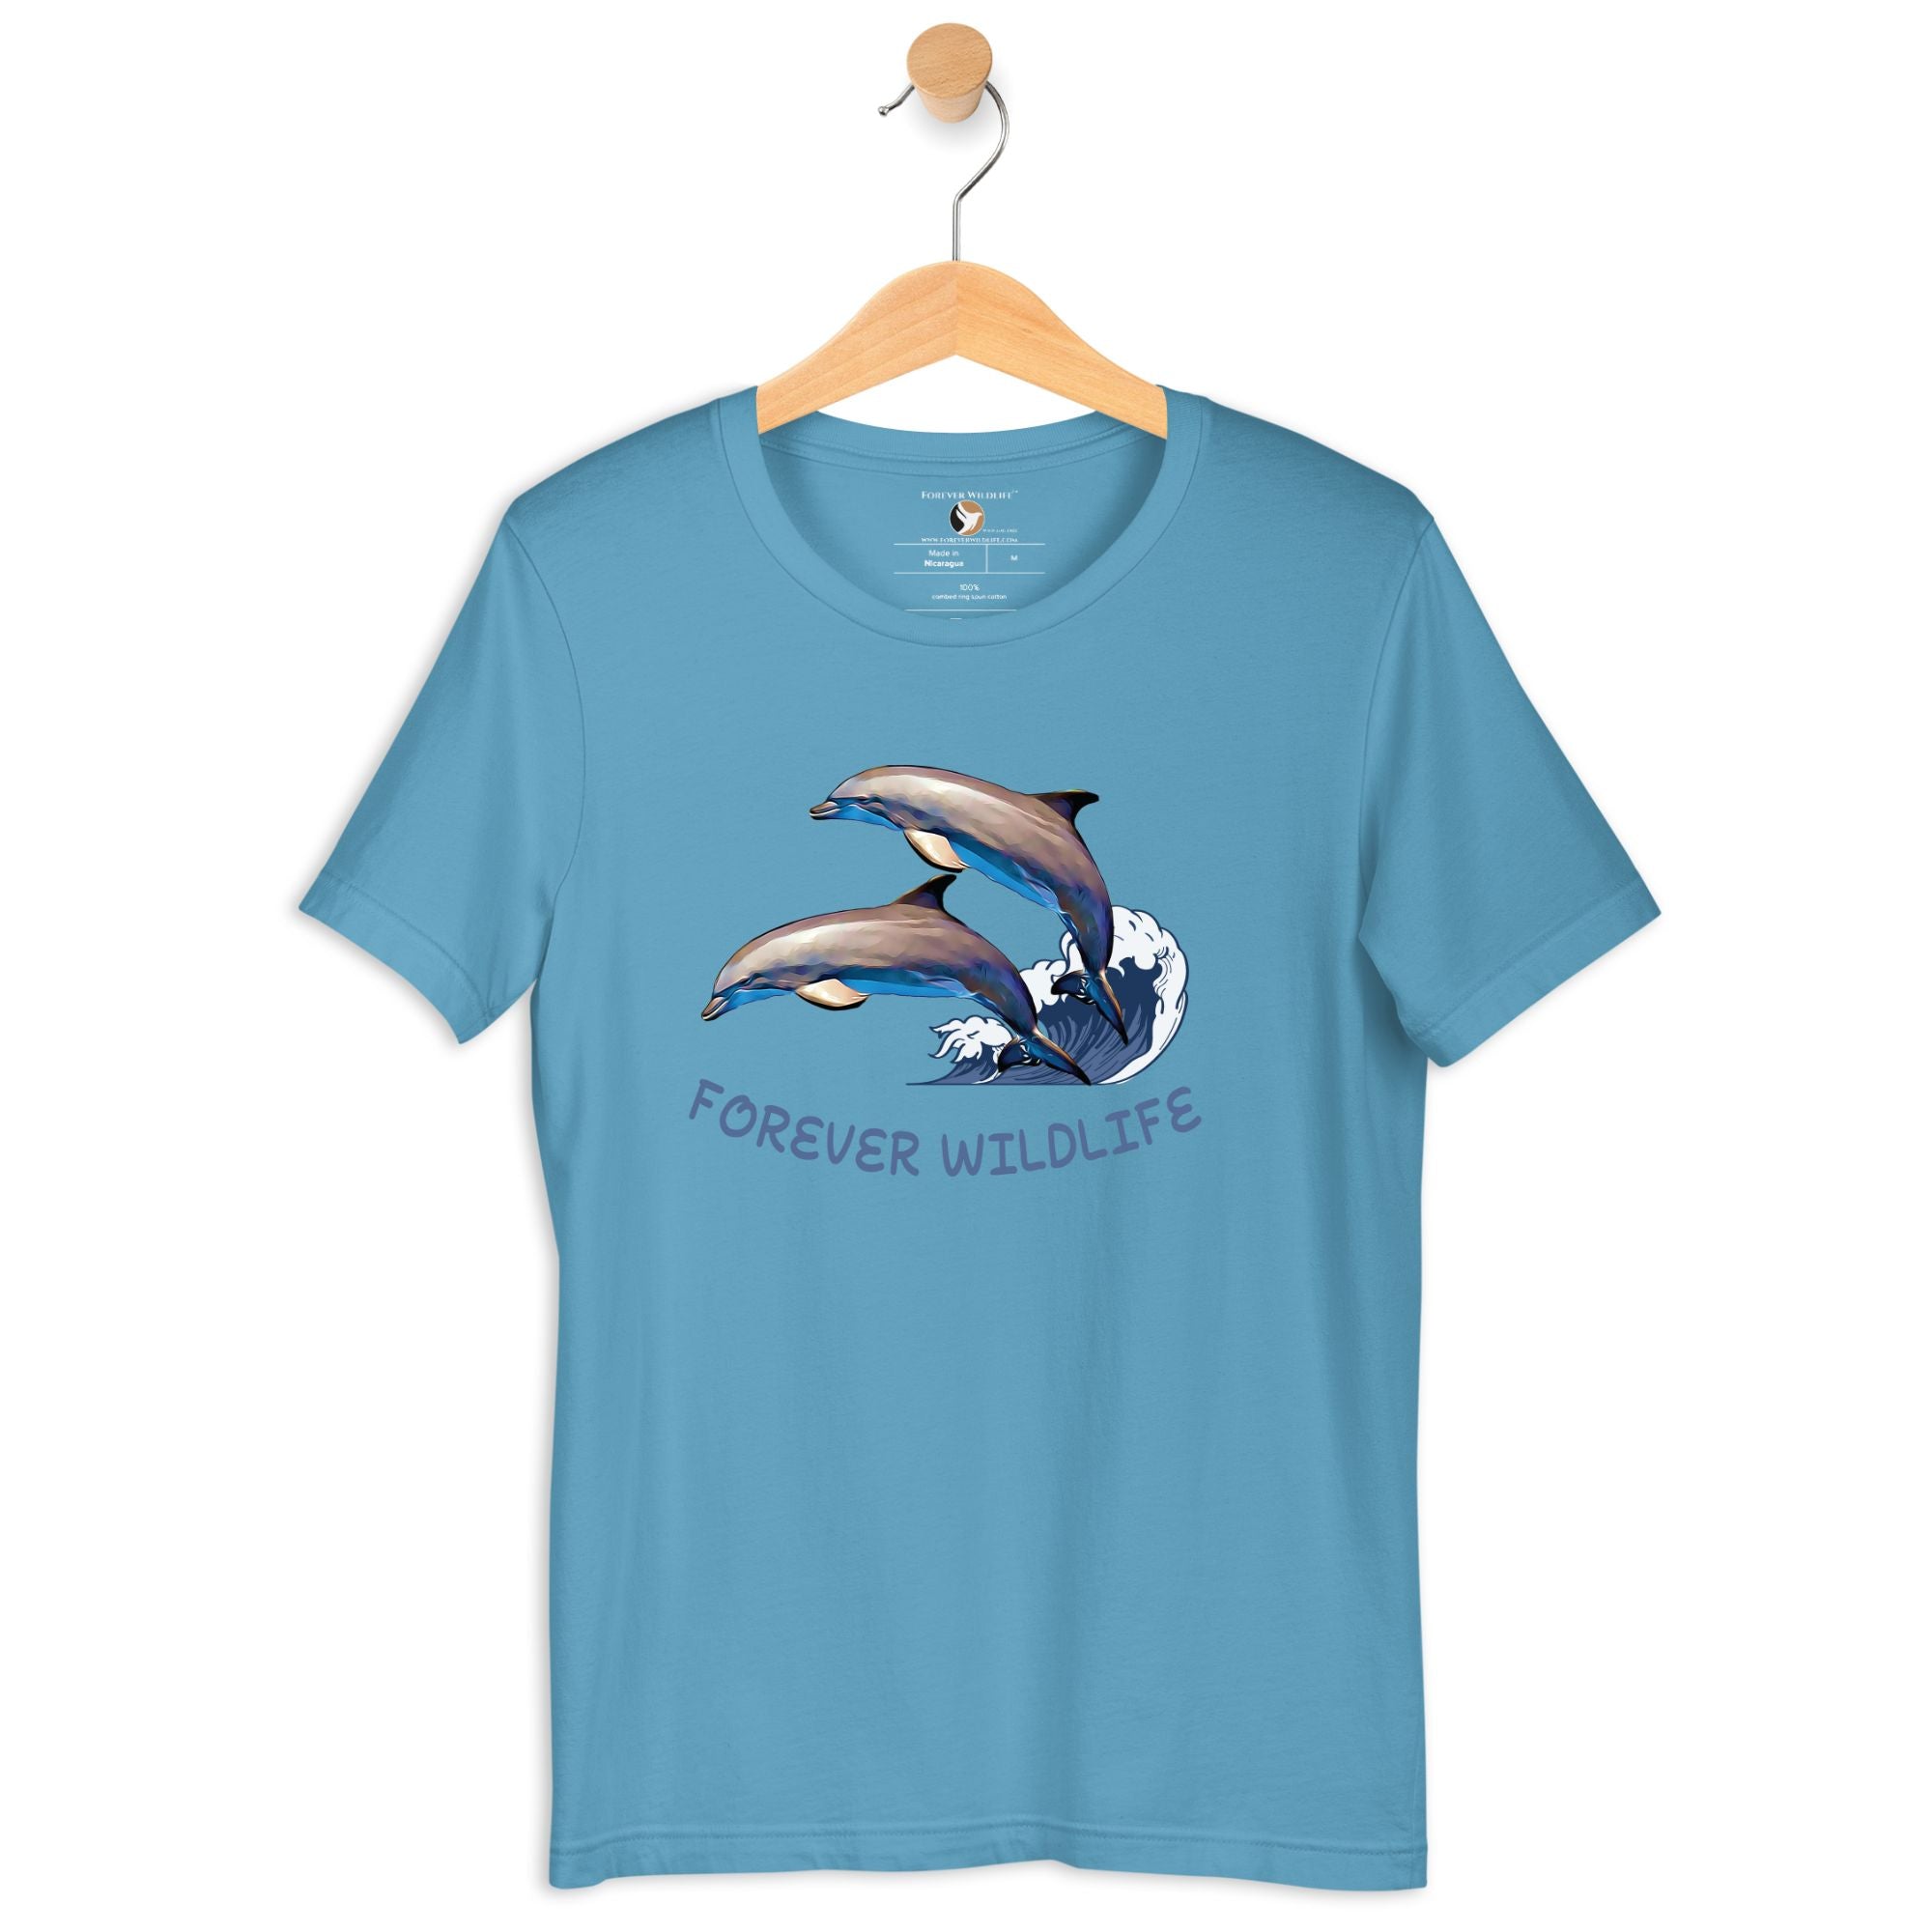 Dolphin T-Shirt in Ocean Blue – Premium Wildlife T-Shirt Design, Wildlife Clothing & Apparel from Forever Wildlife